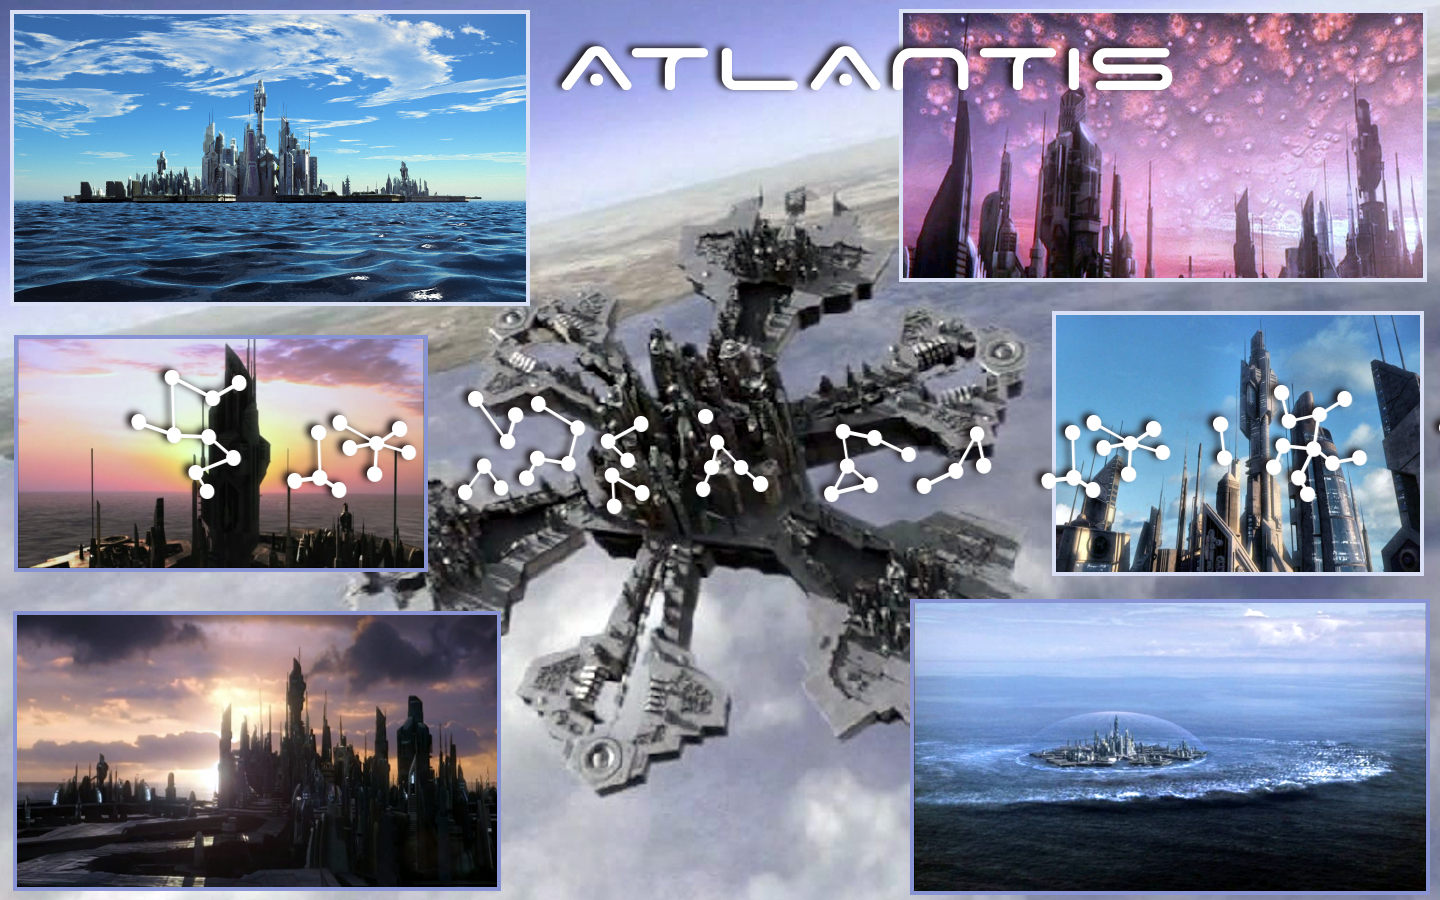 Atlantis Picspam by Tarlan
Keywords: art_digital_manip;stargate_atlantis_art;stargate_atlantis_wpr